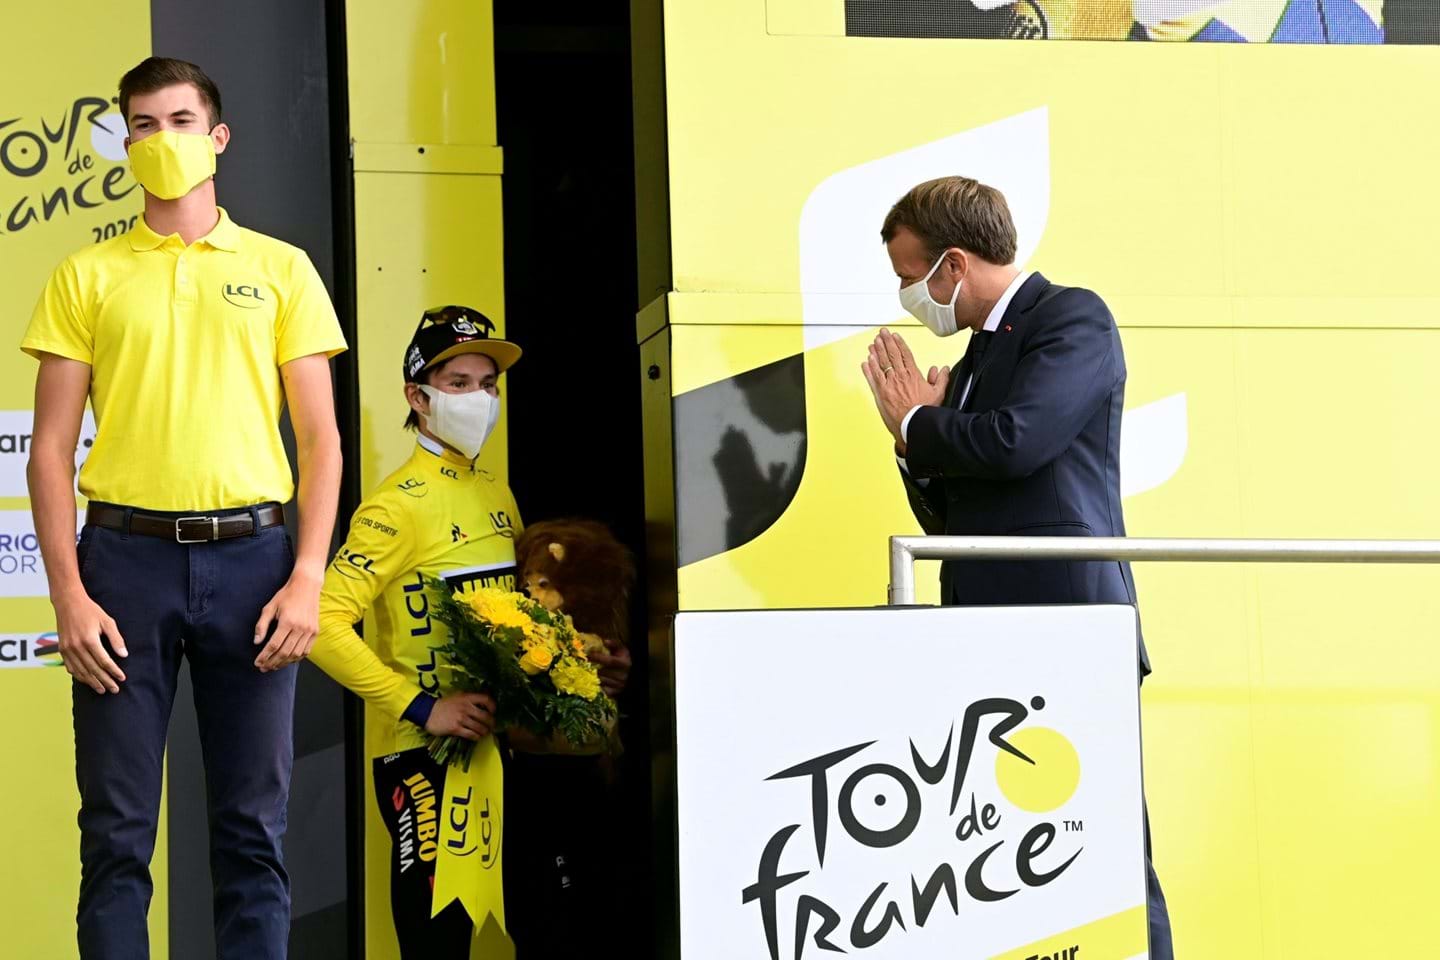 President of France Macron congratulates Primož Roglič the day he seizes the yellow jersey.